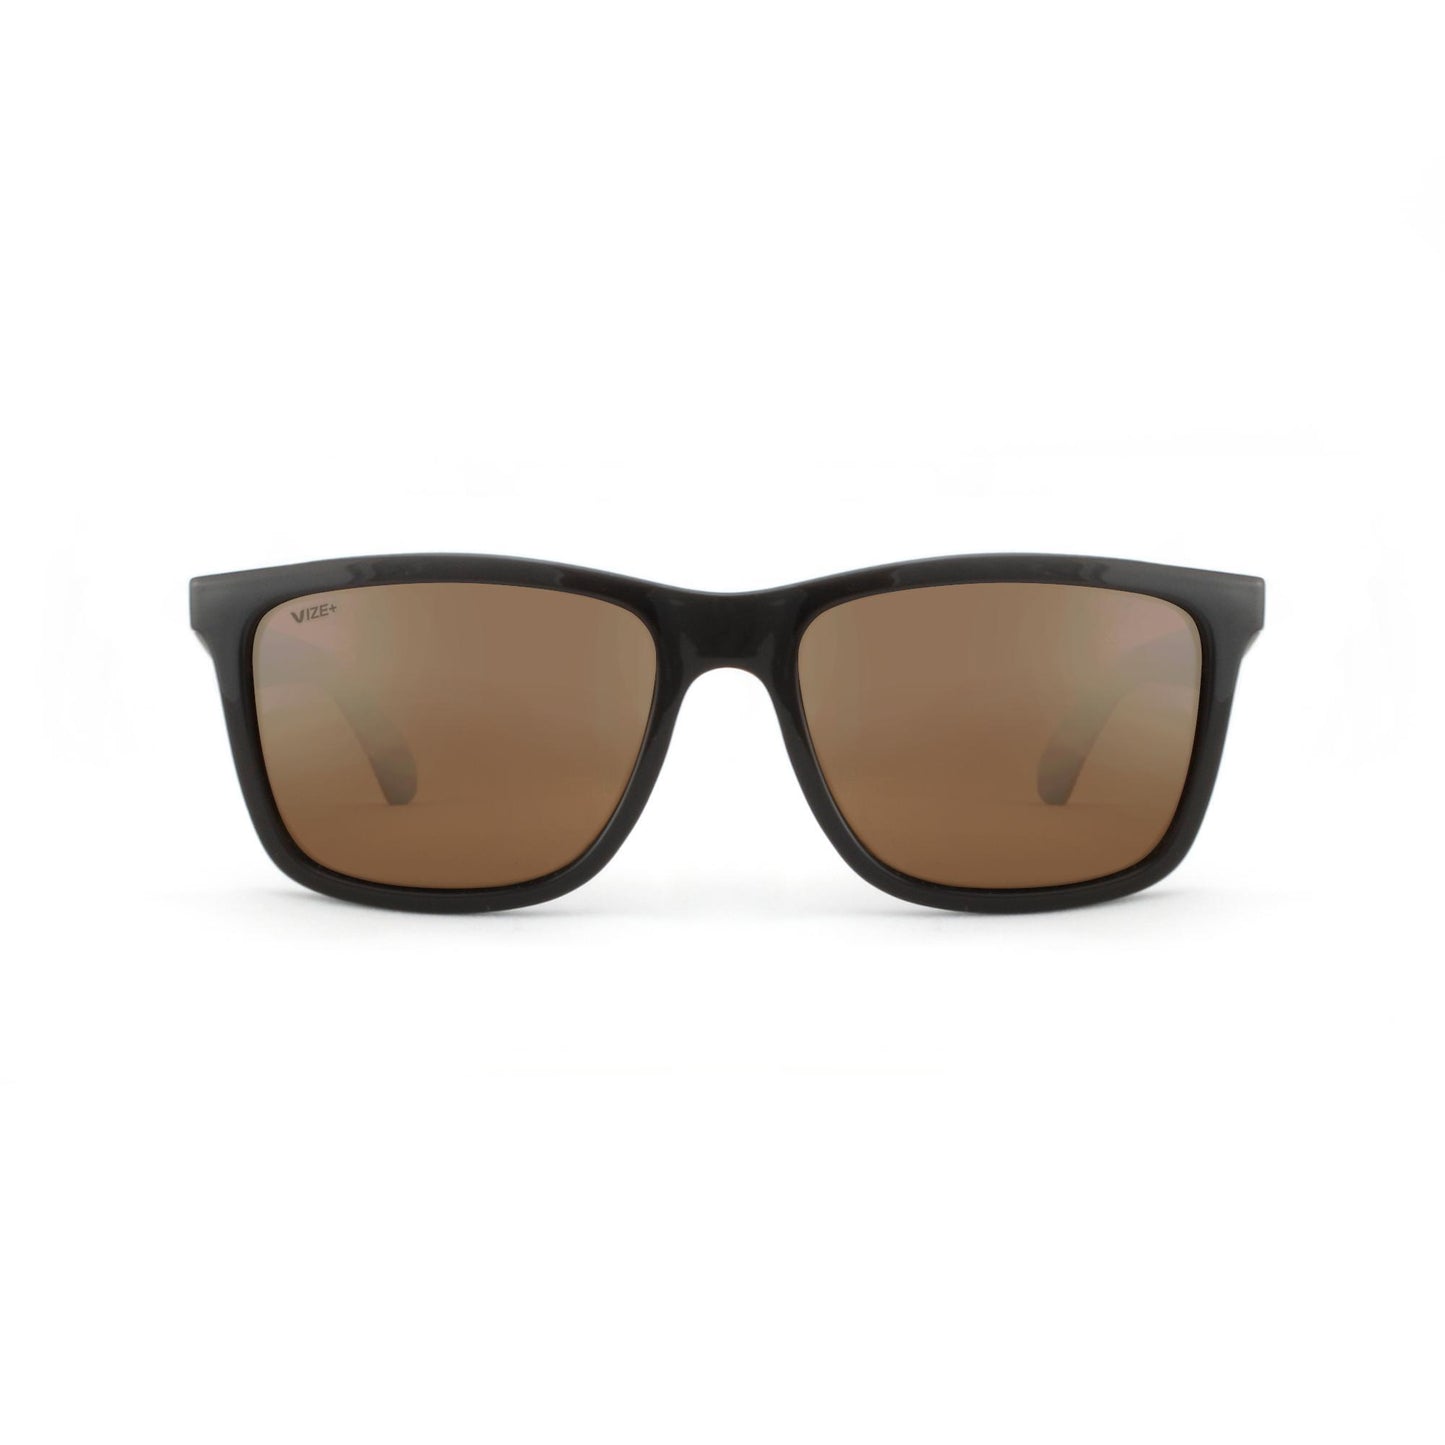 Viento Polarized Sunglasses (Brown/Amber)